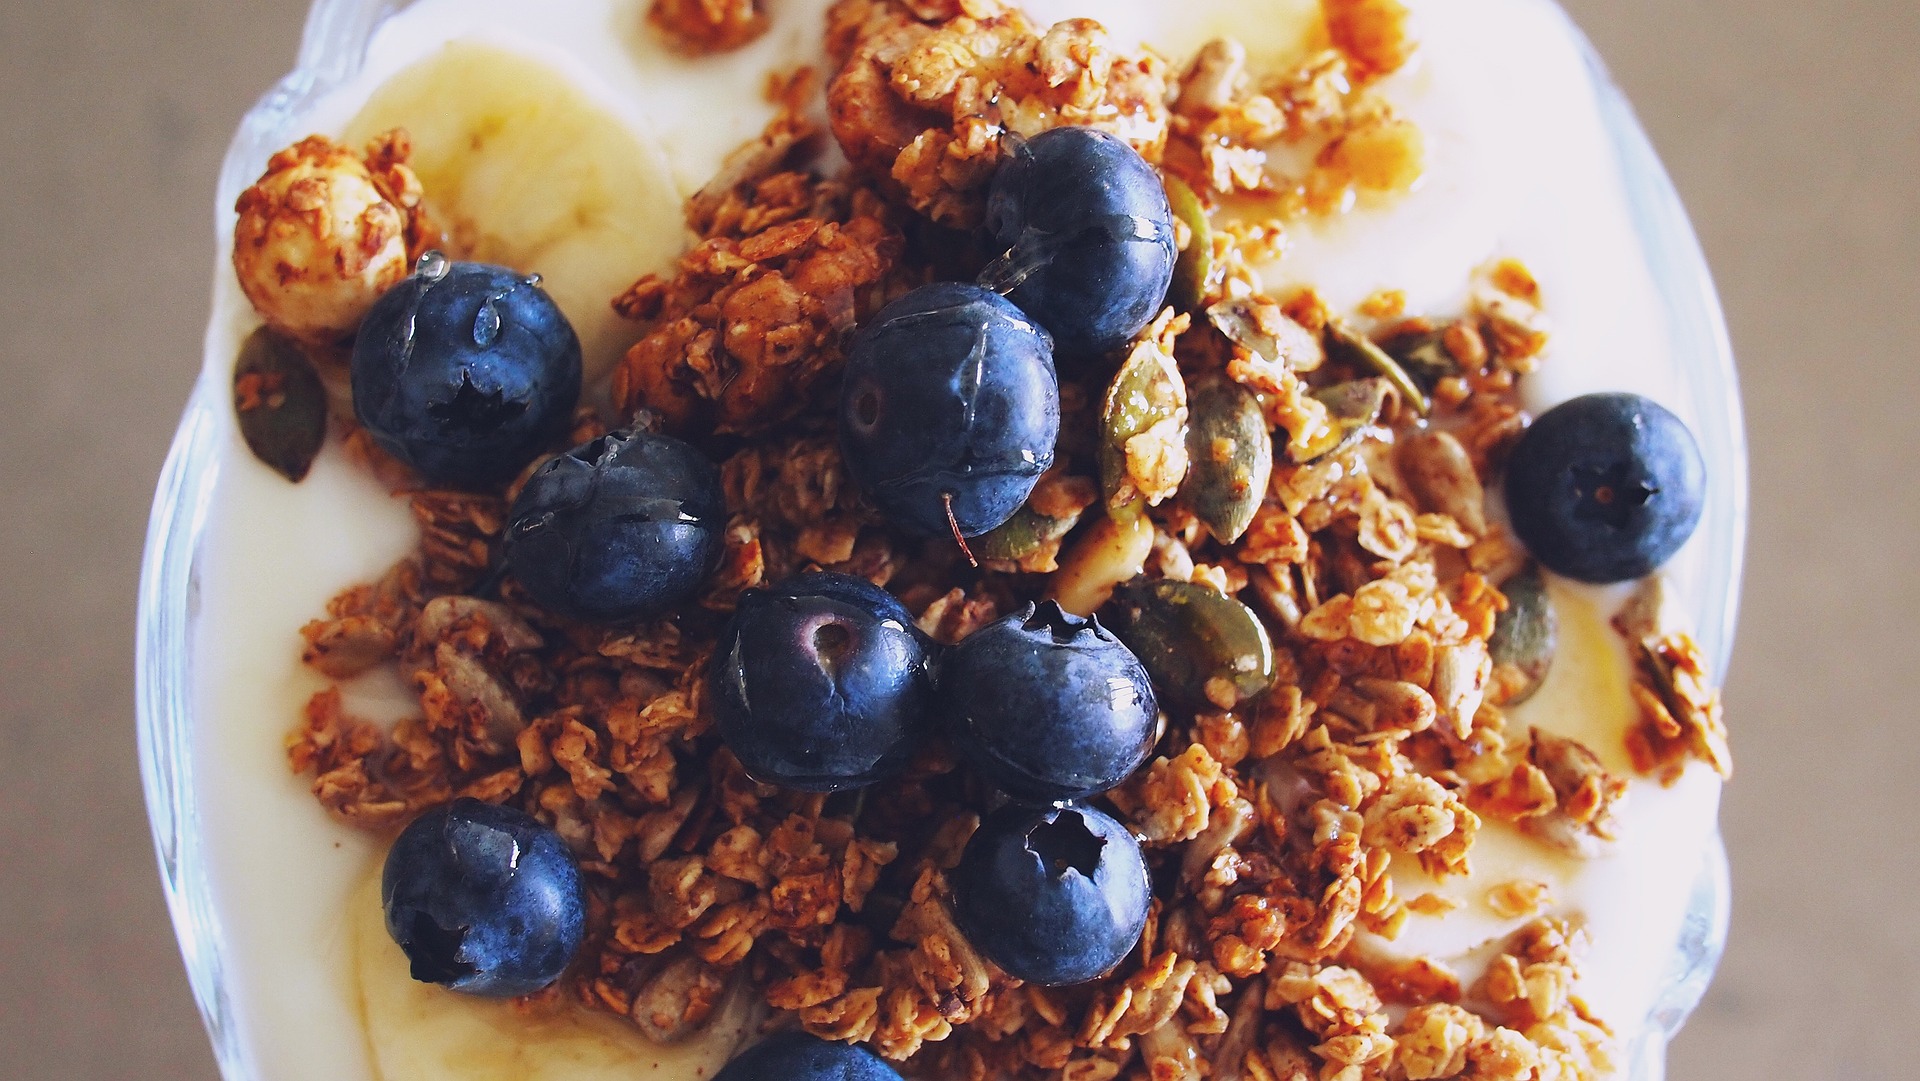 A healthy breakfast of fruit, granola, and yogurt